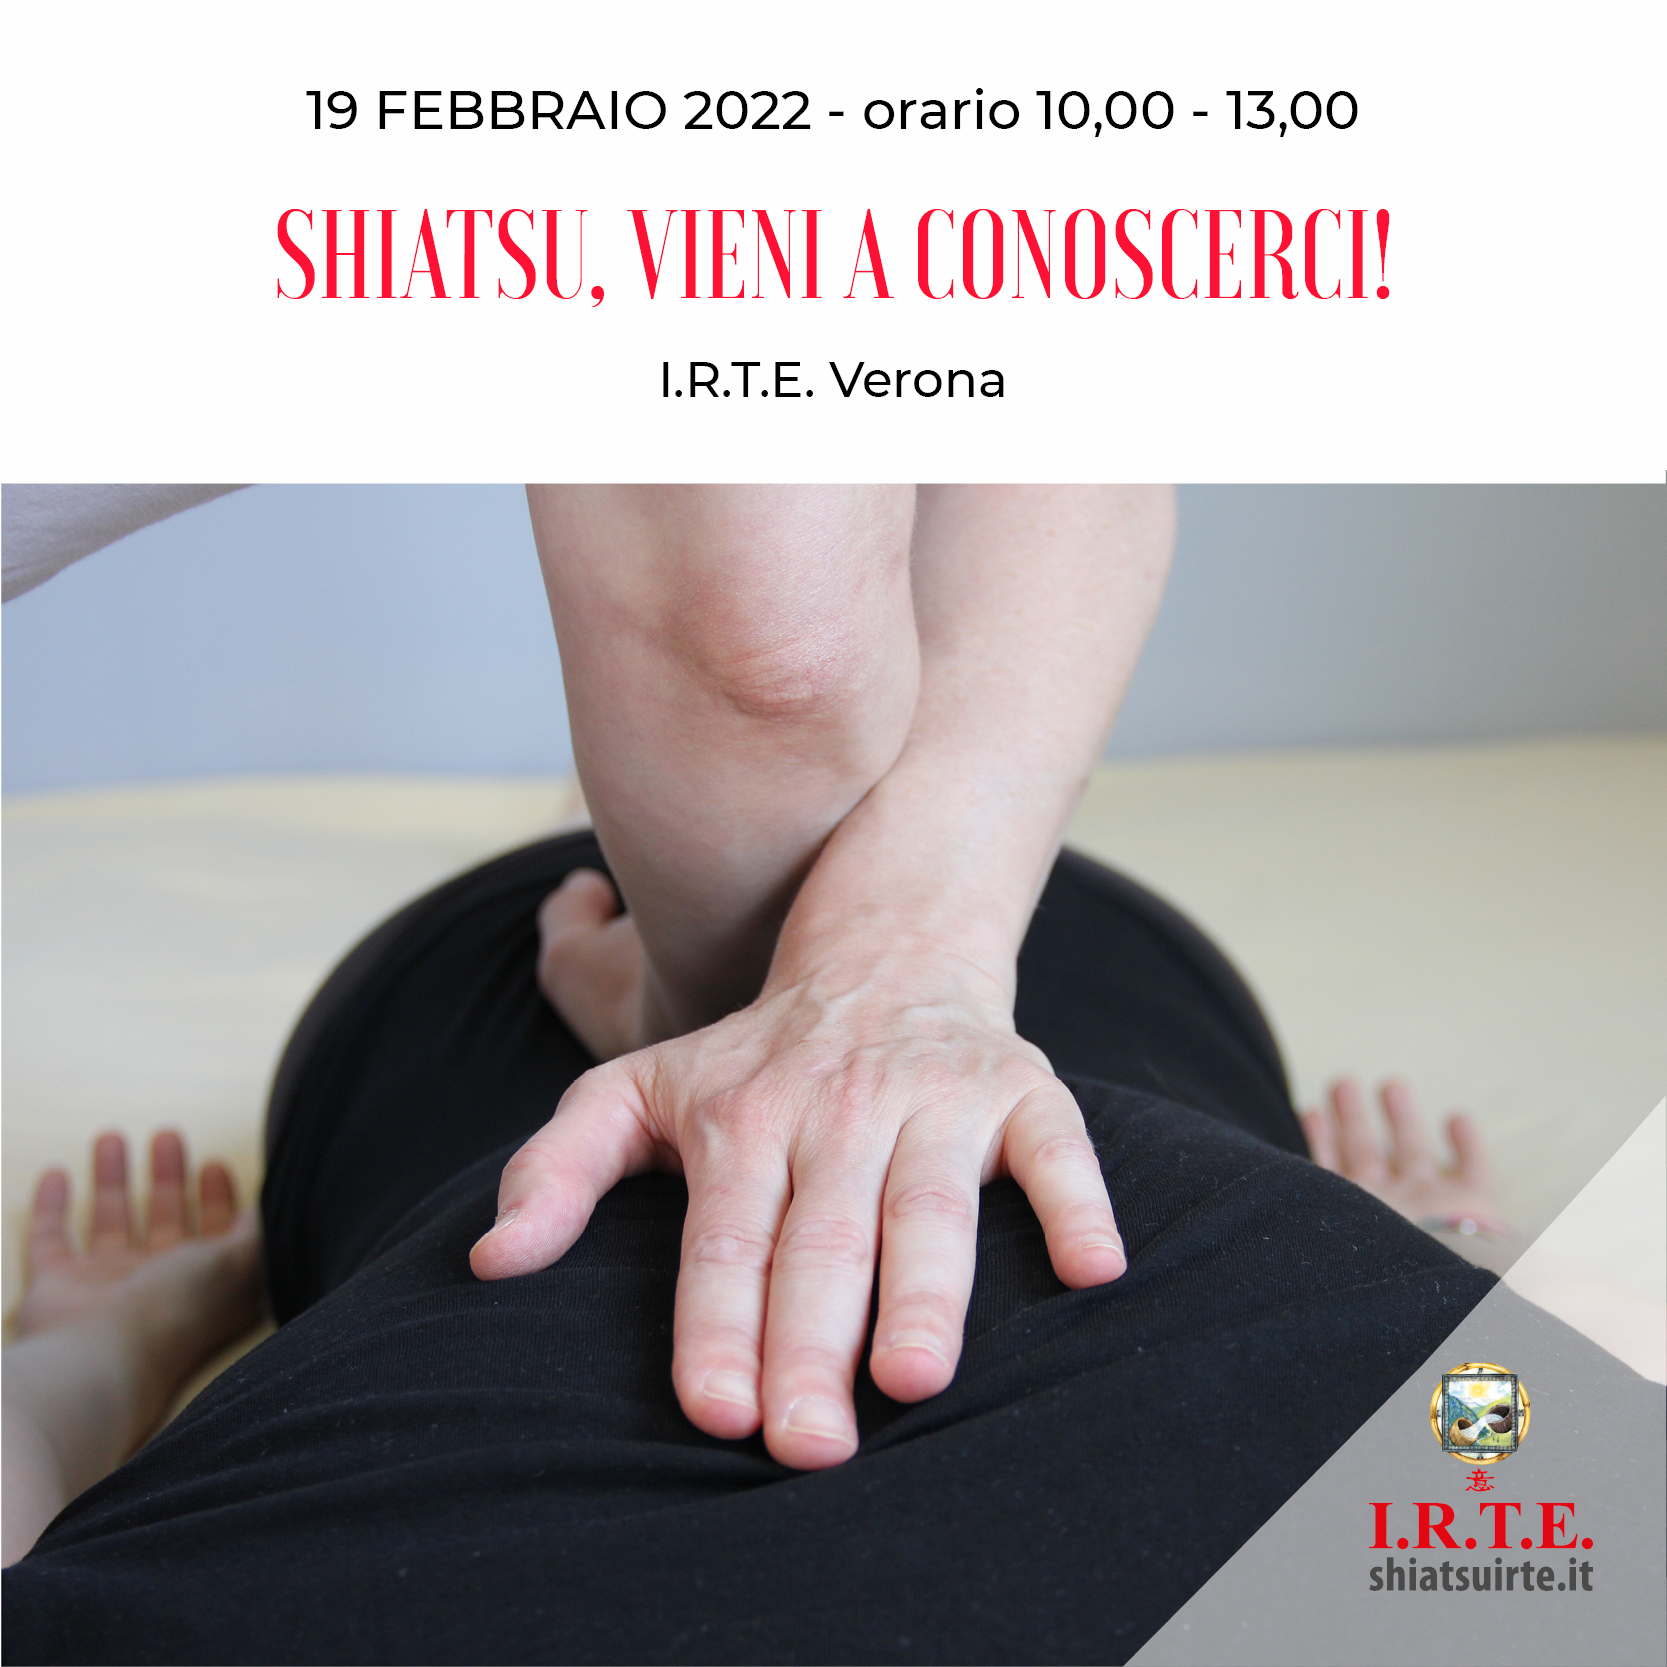 Verona, 19 Febbraio 2022 Vieni a conoscerci!